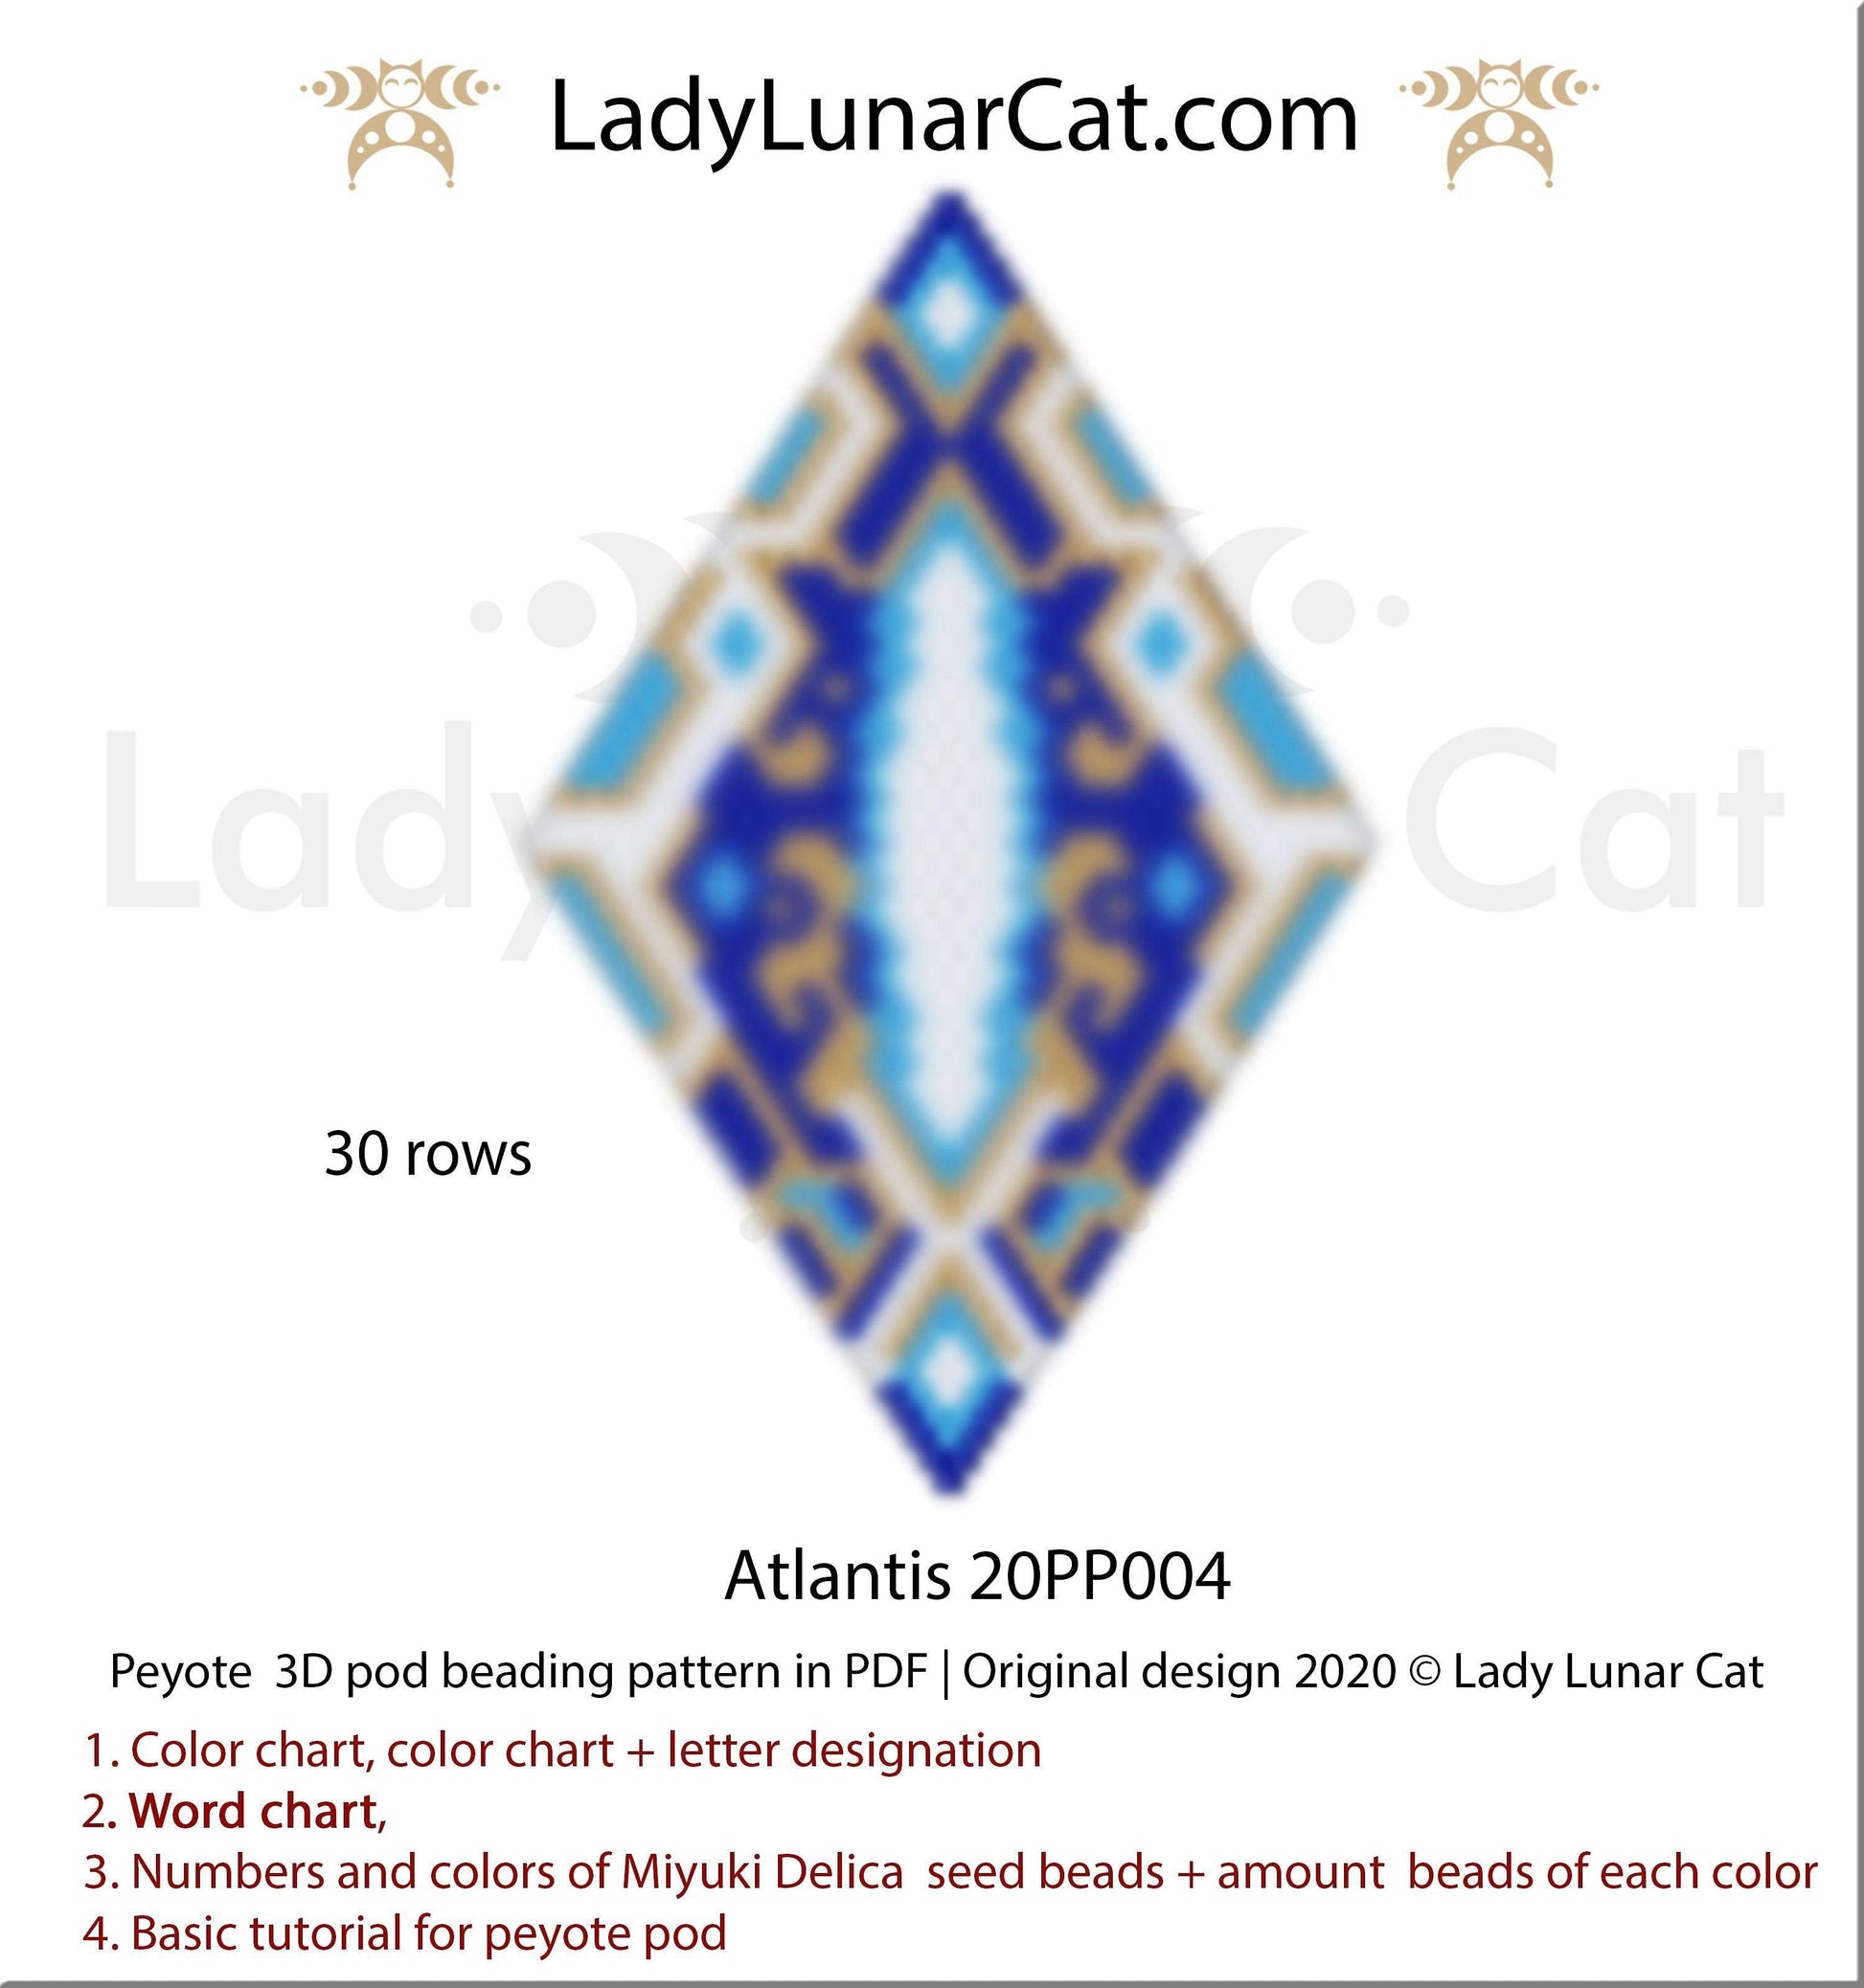 3d Peyote pod patterns for beading Atlantis 20PP004 LadyLunarCat